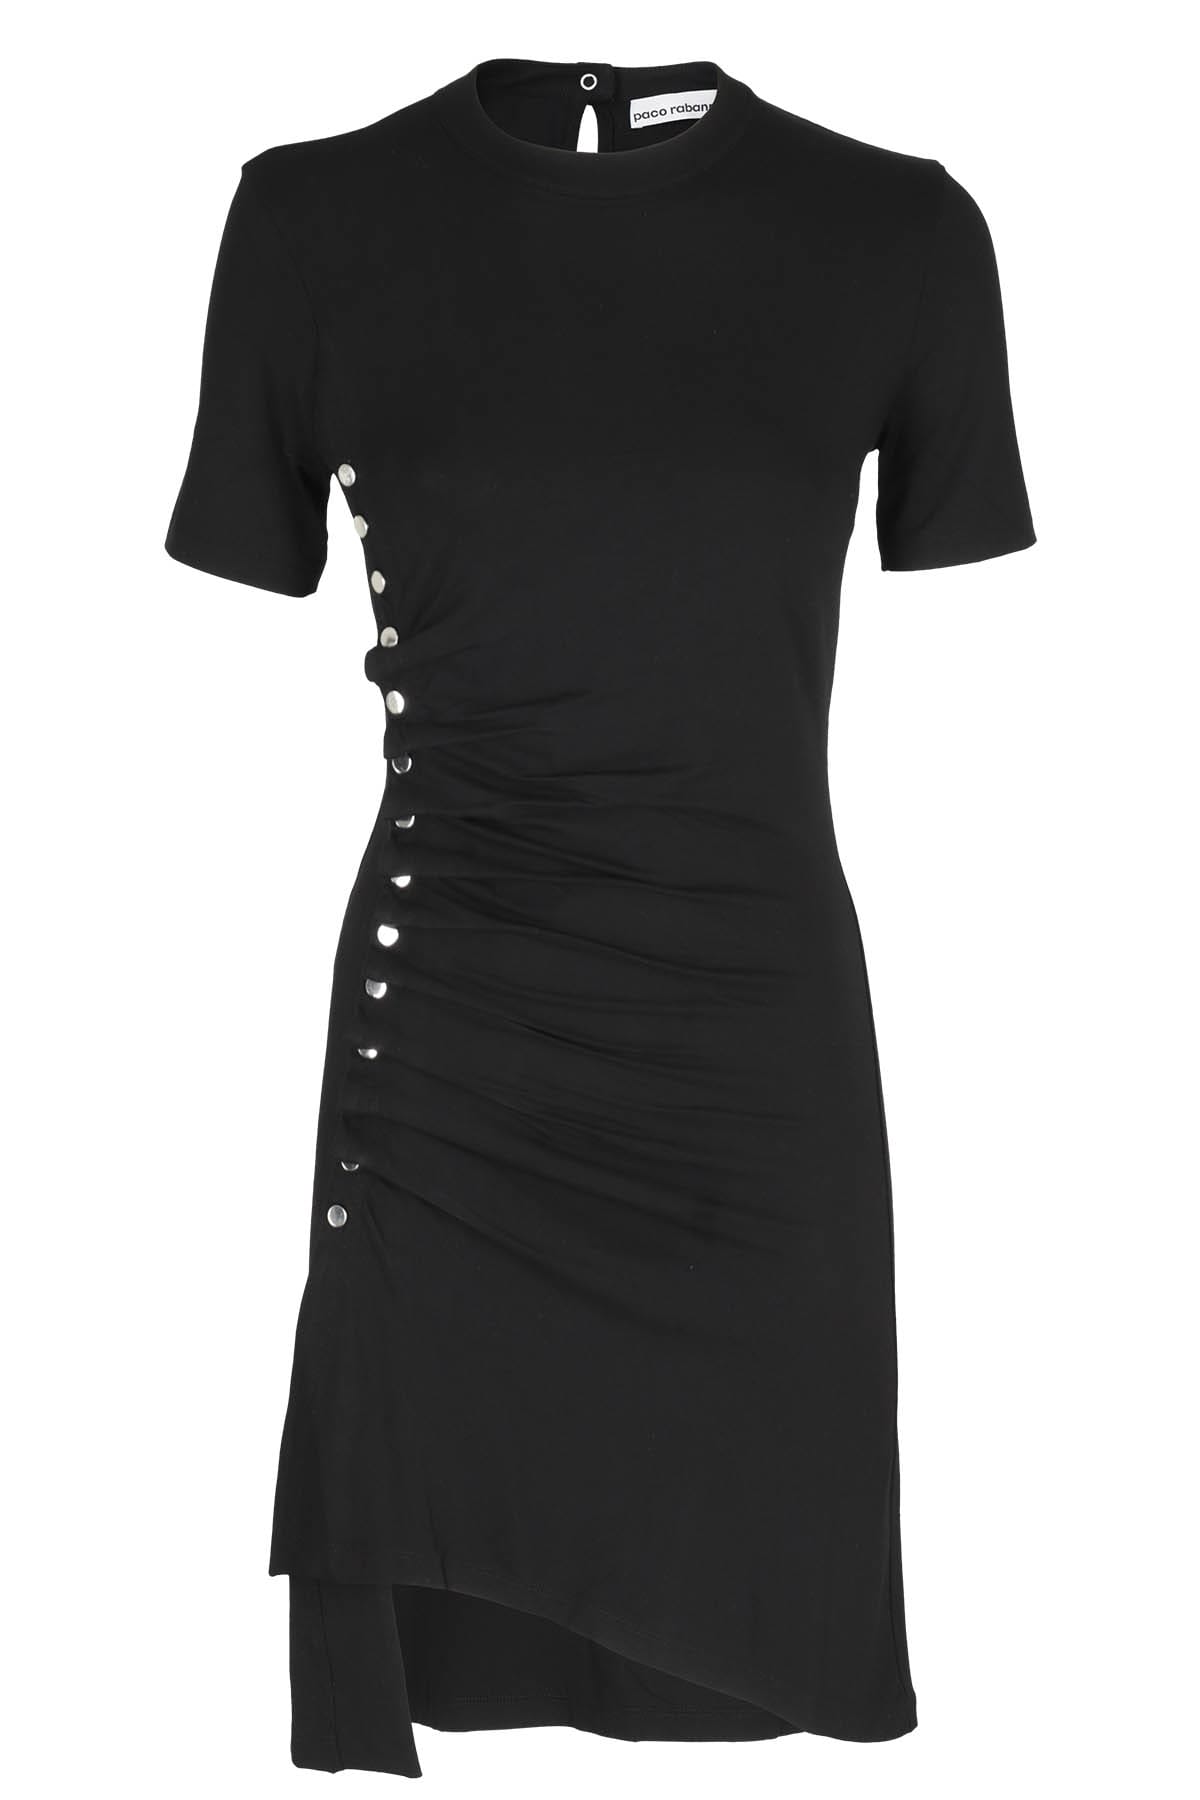 Black Mini Dress With Draping